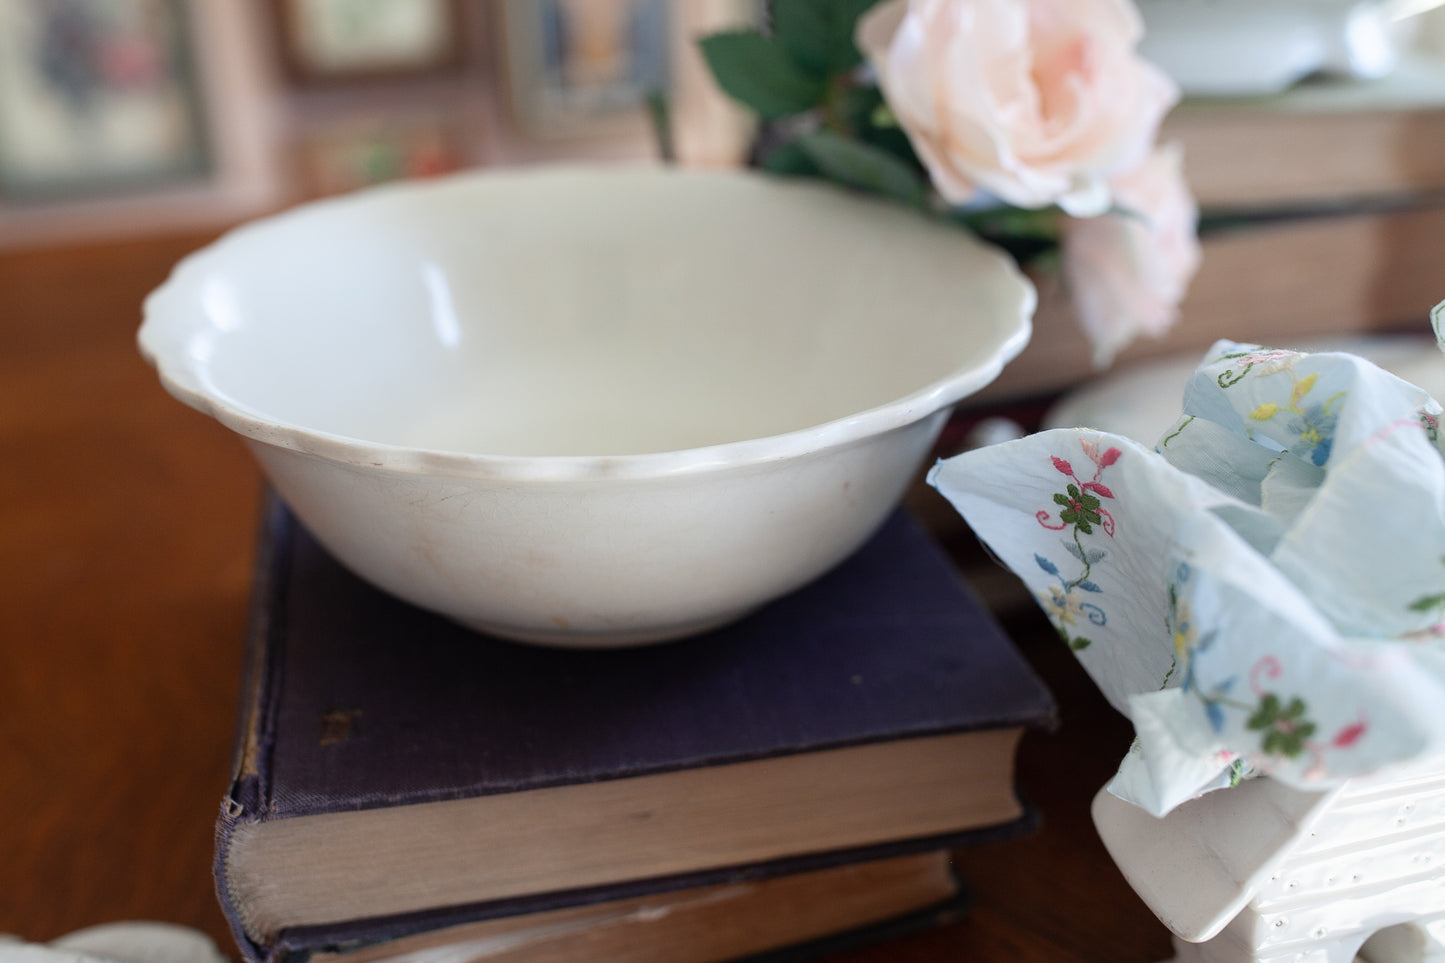 Antique Ironstone Bowl - Scalloped edge bowl